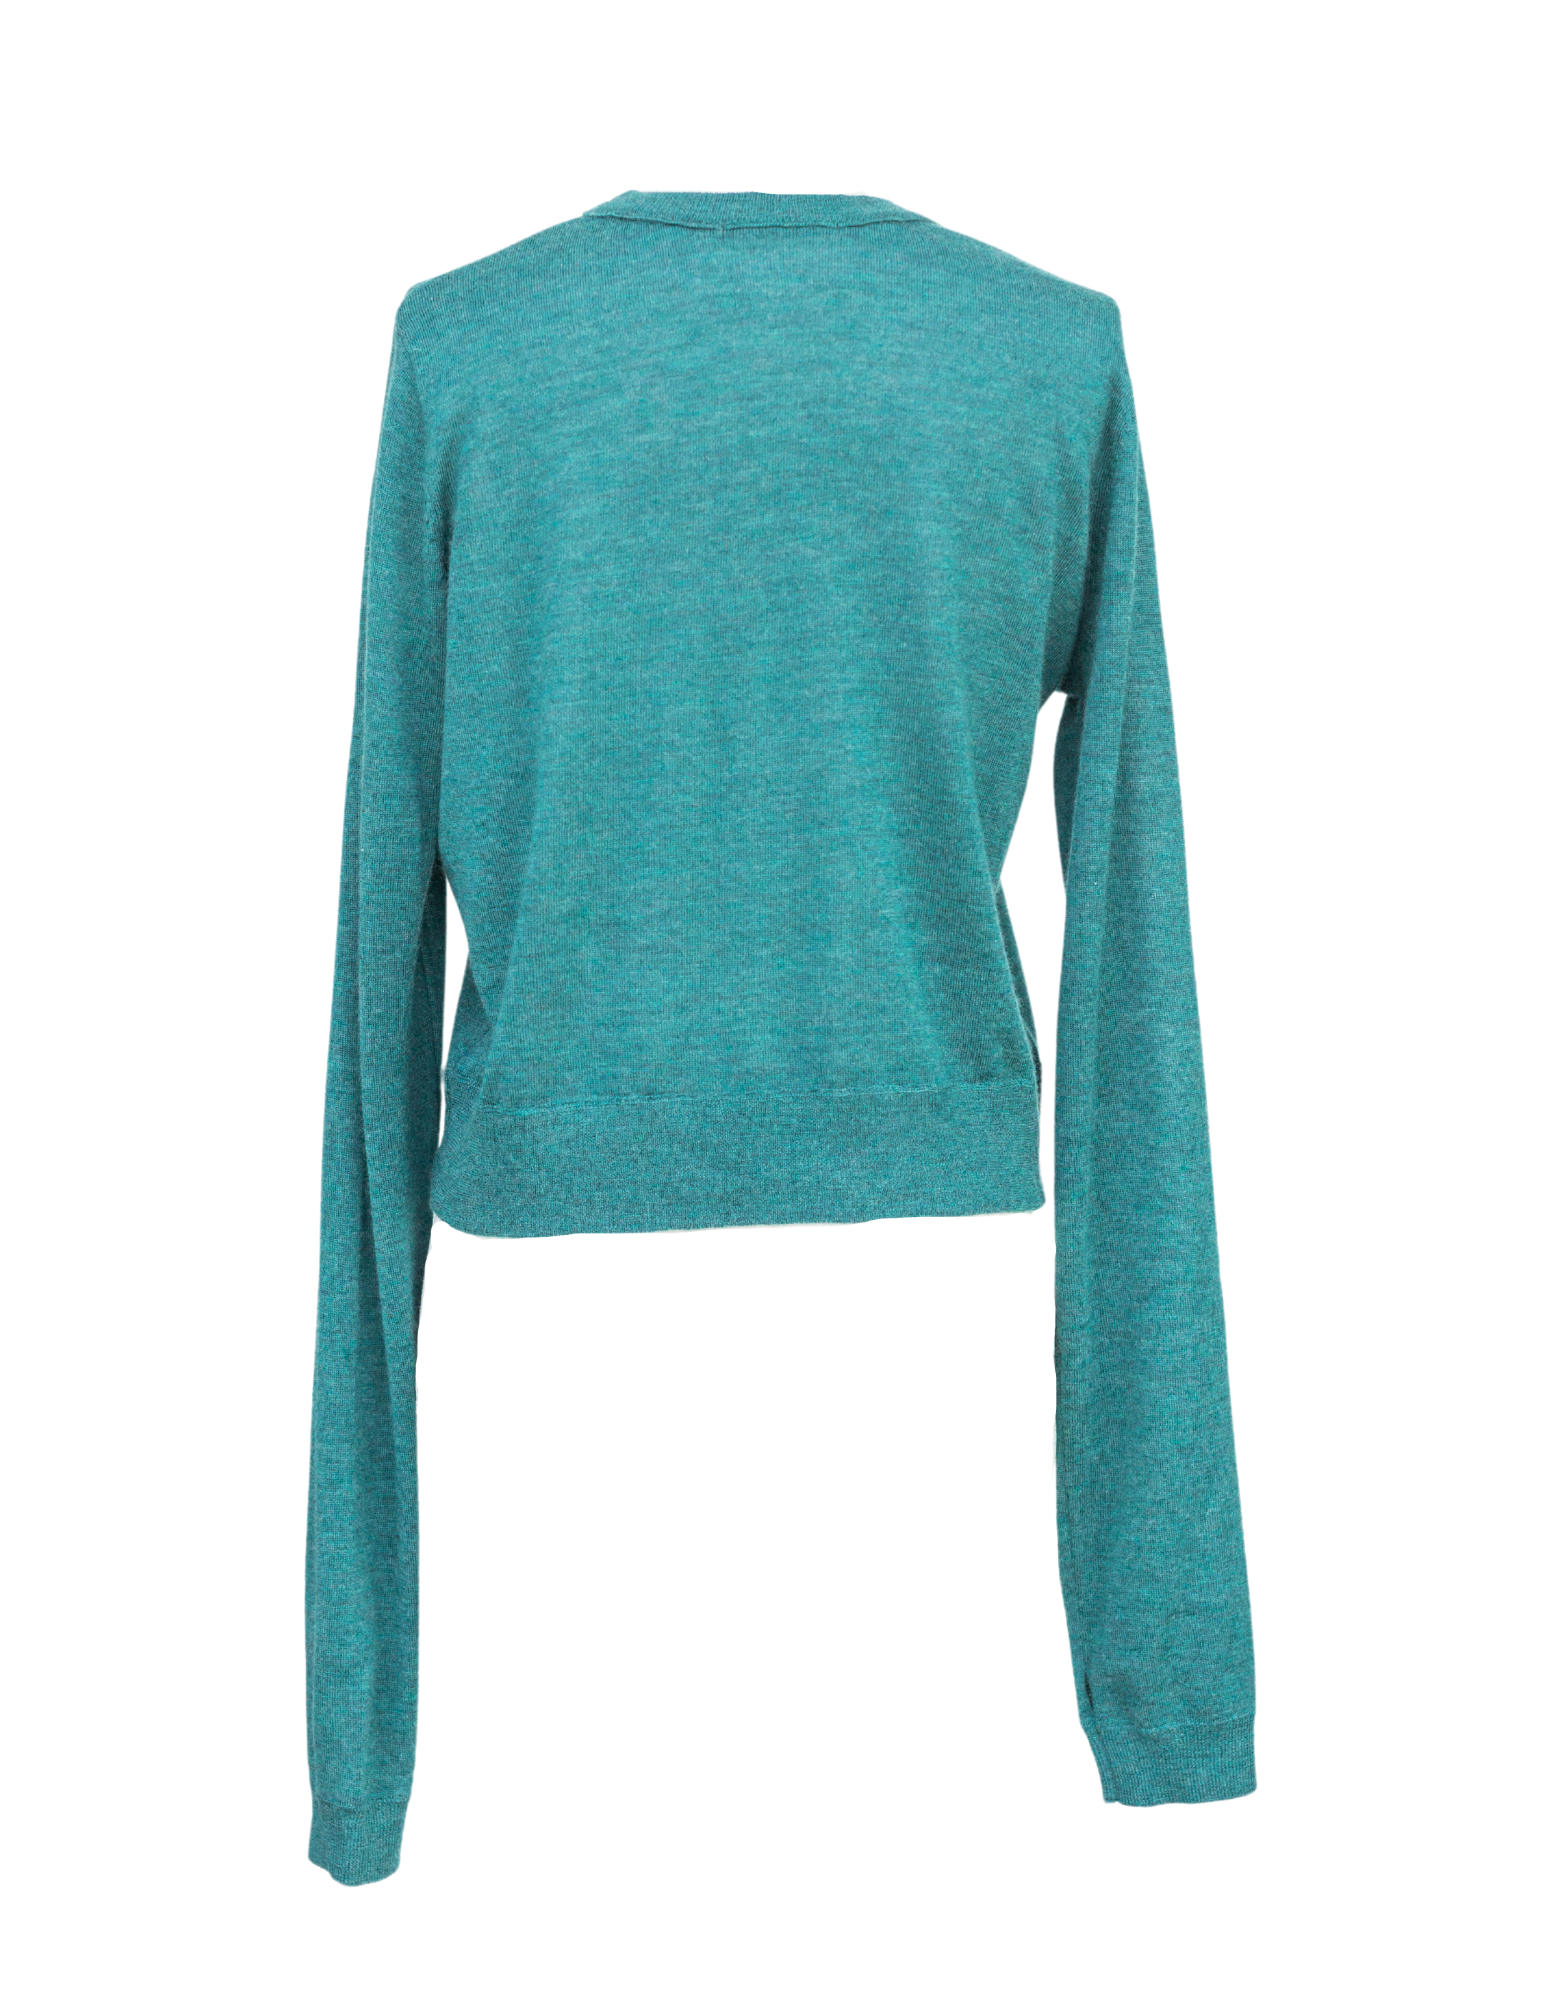 All Thumbs Sweater - Paris Green